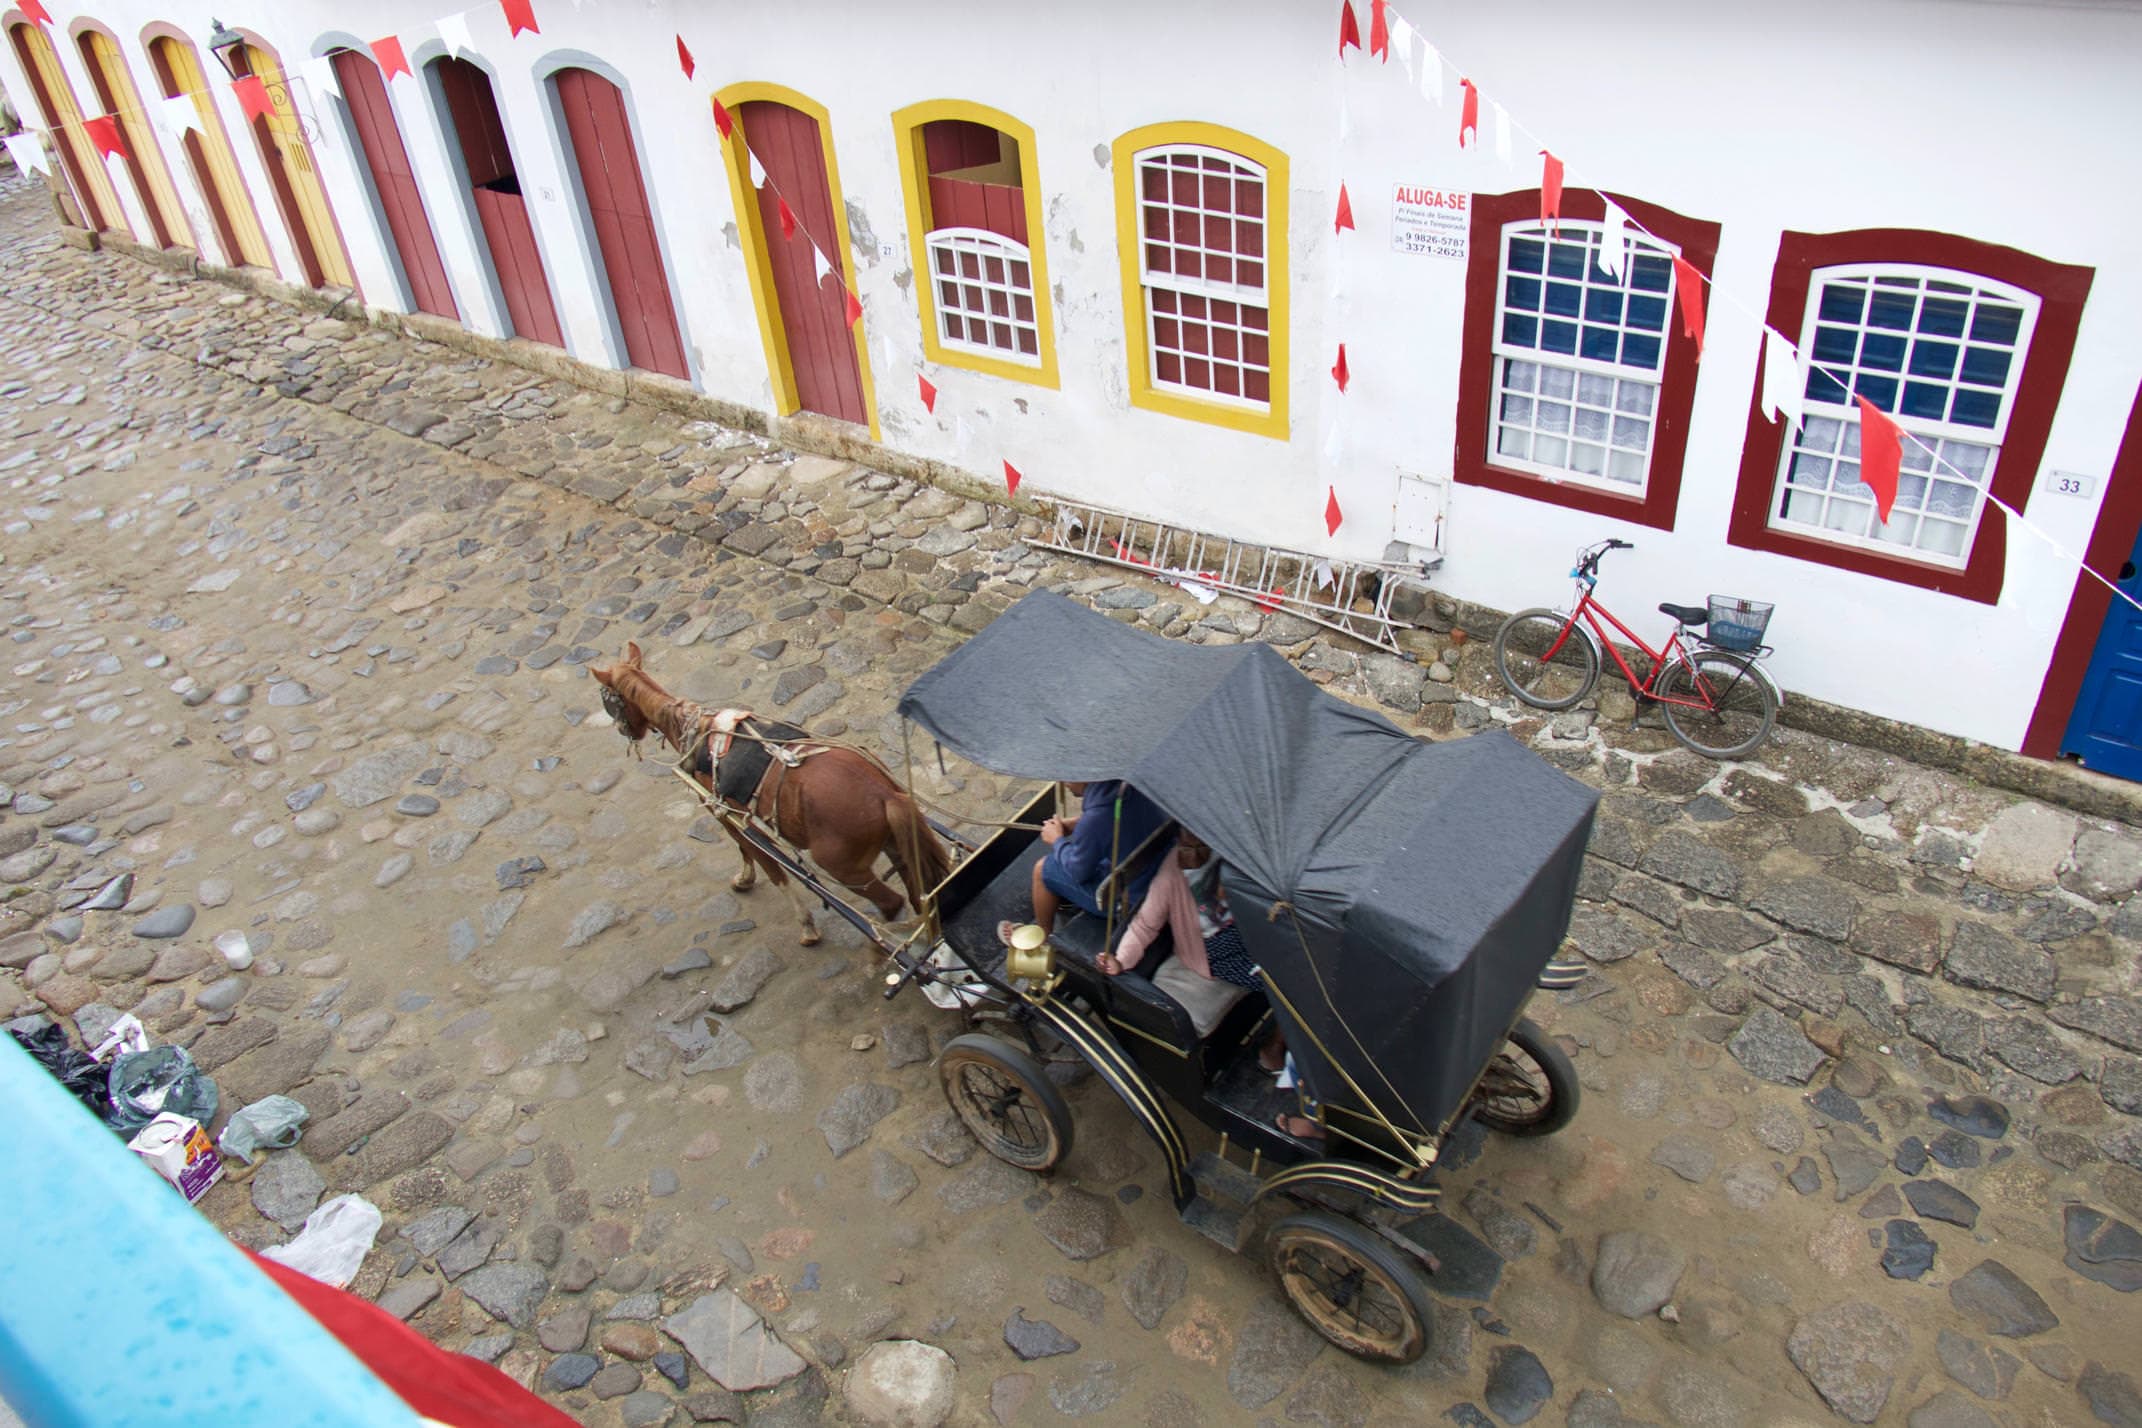 Brazil paraty horse and carriage copyright pura aventura thomas power